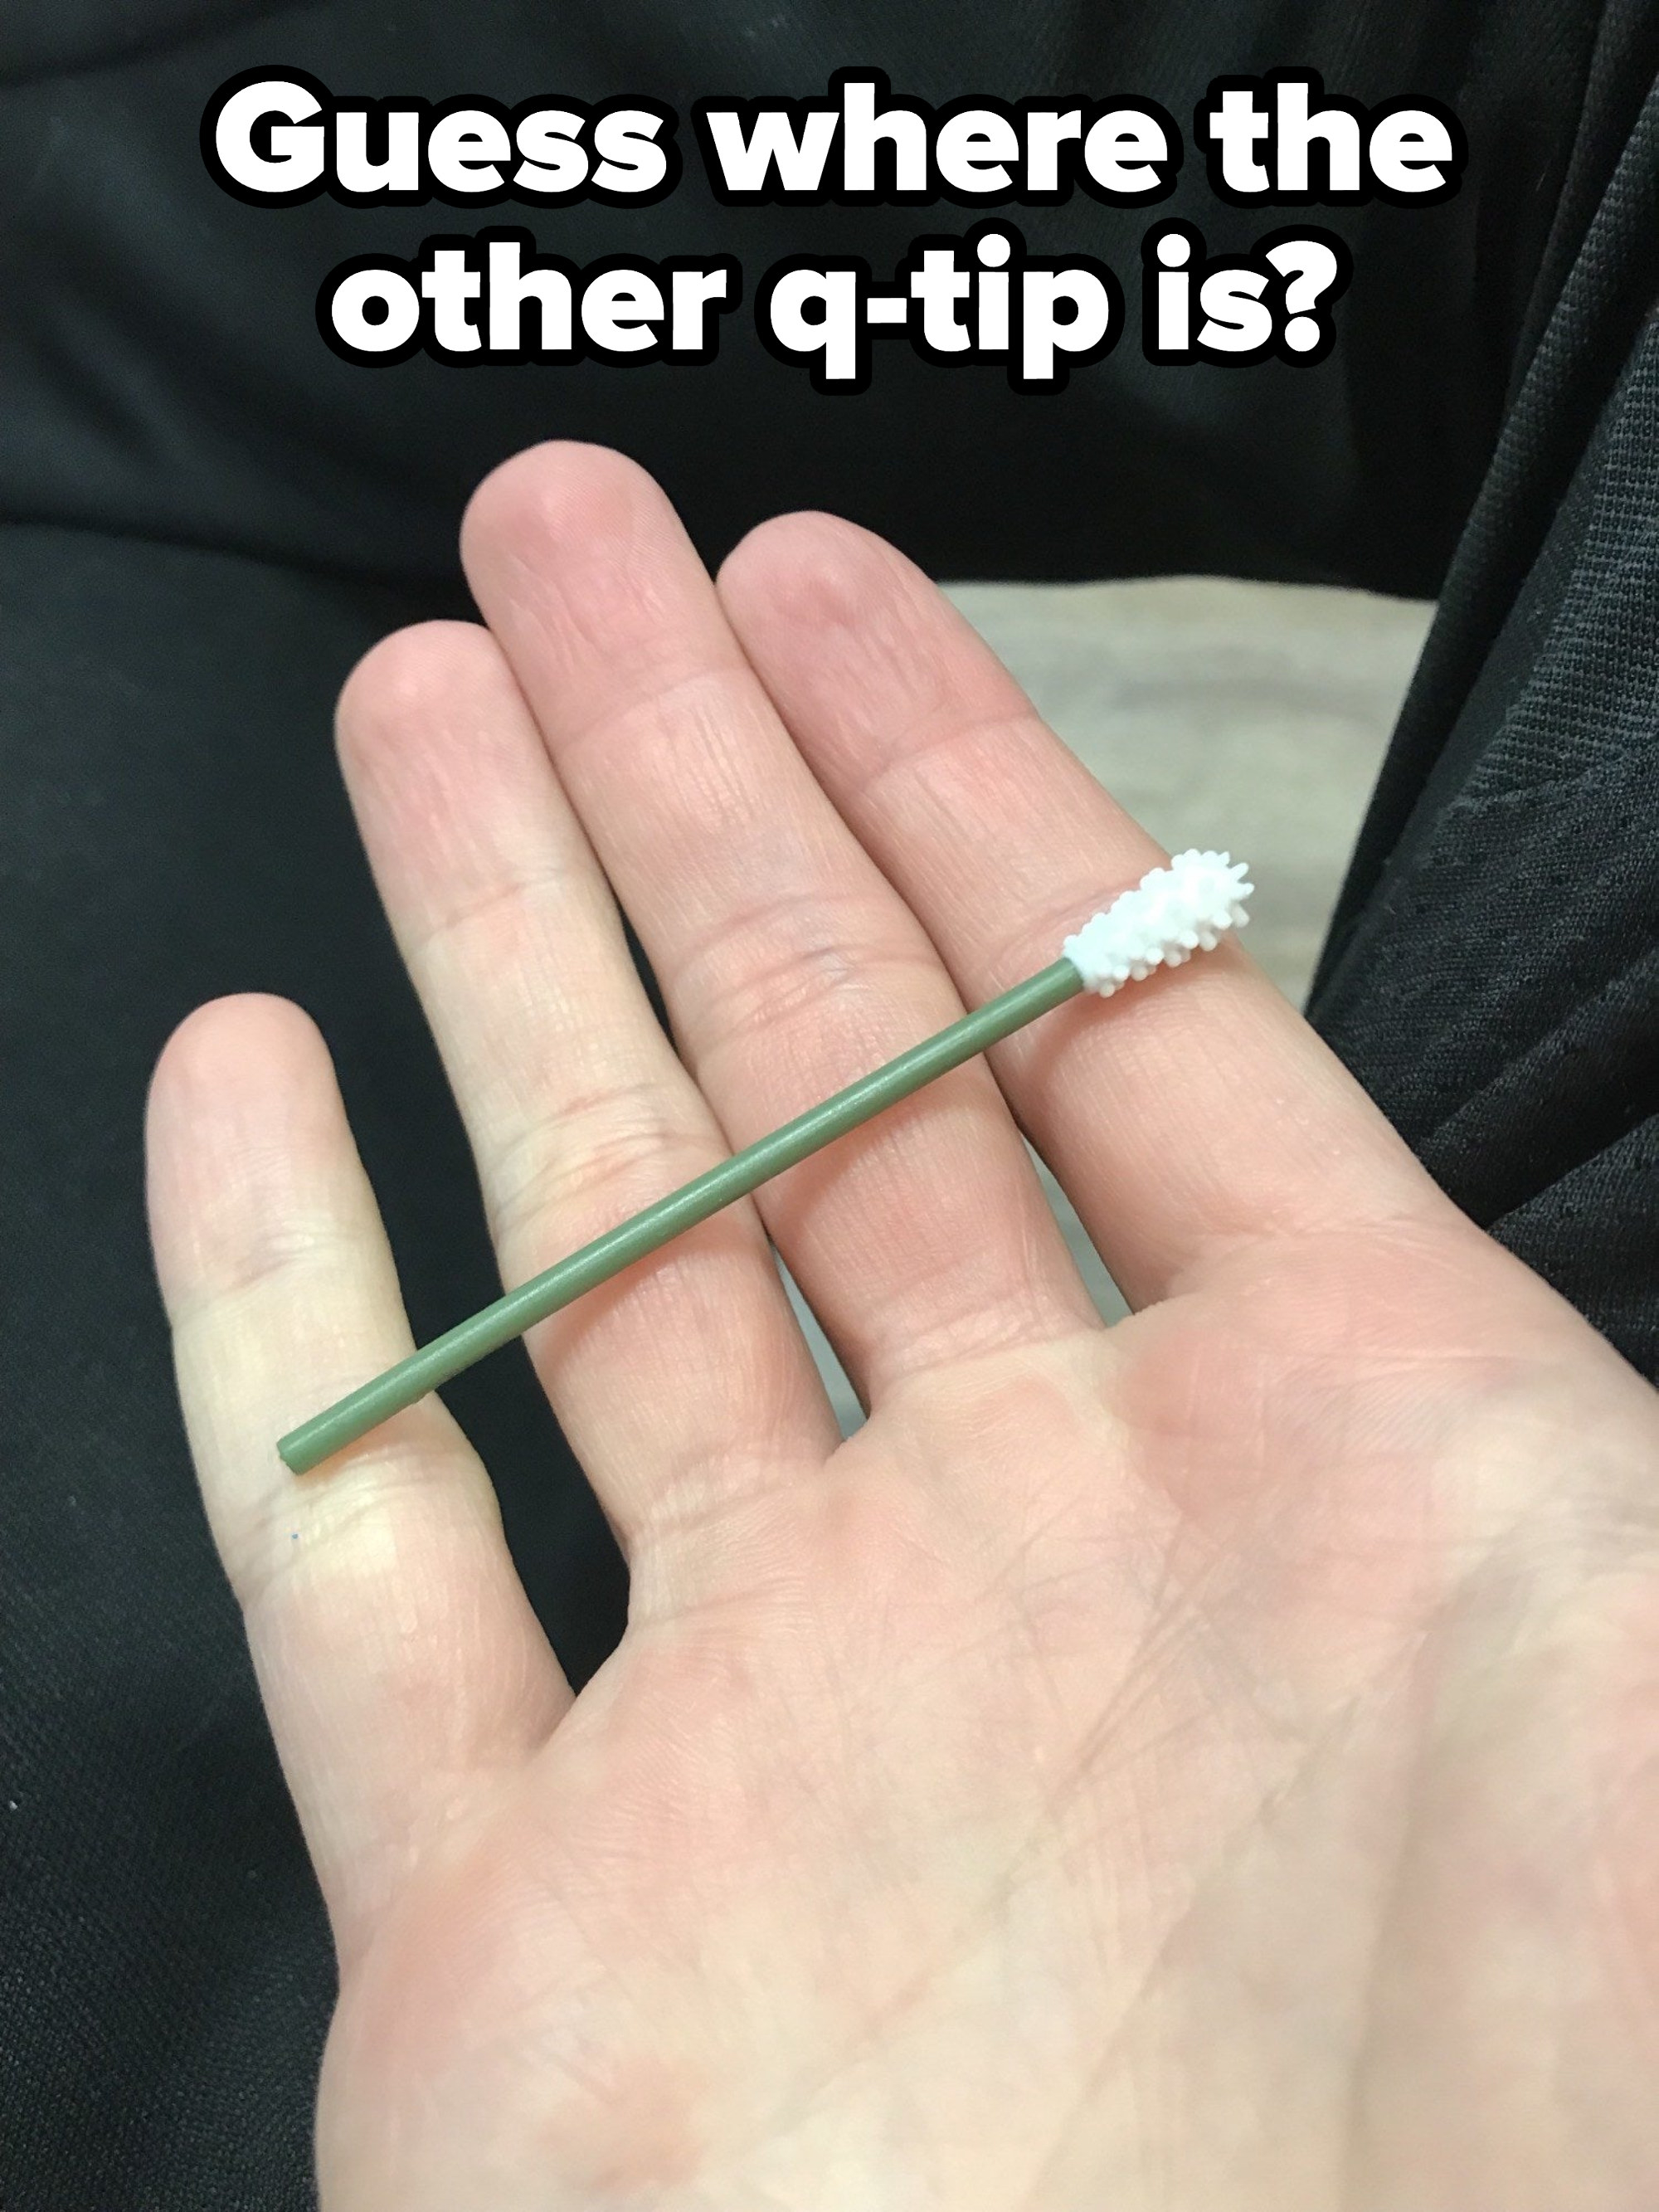 A hand holding a Q-tip